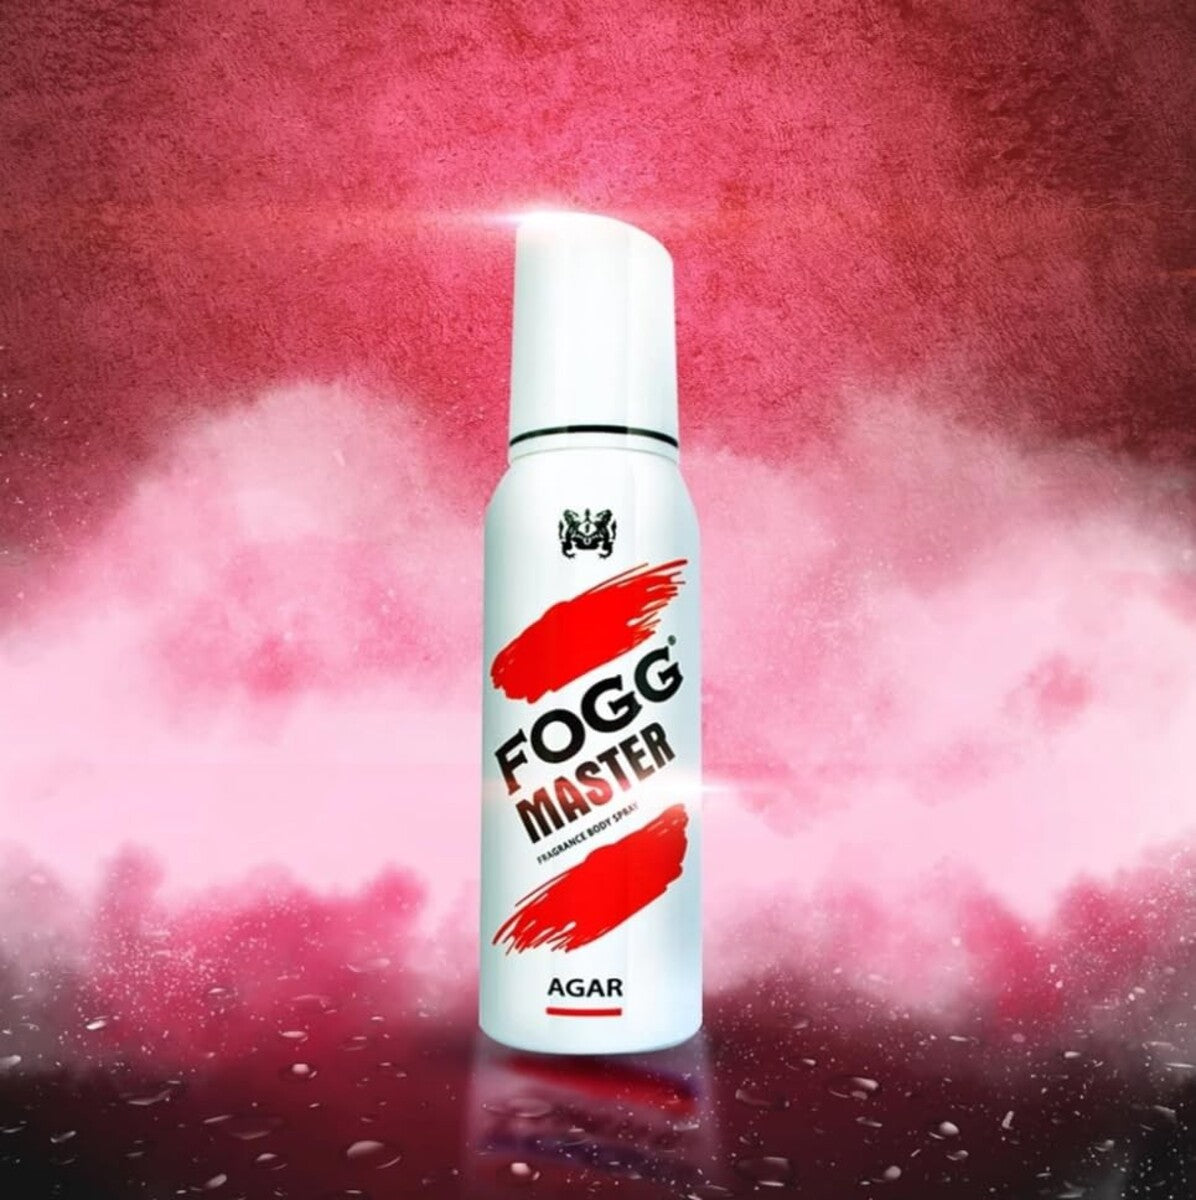 Fogg Master Agar for Men Perfume Spray - 120ml